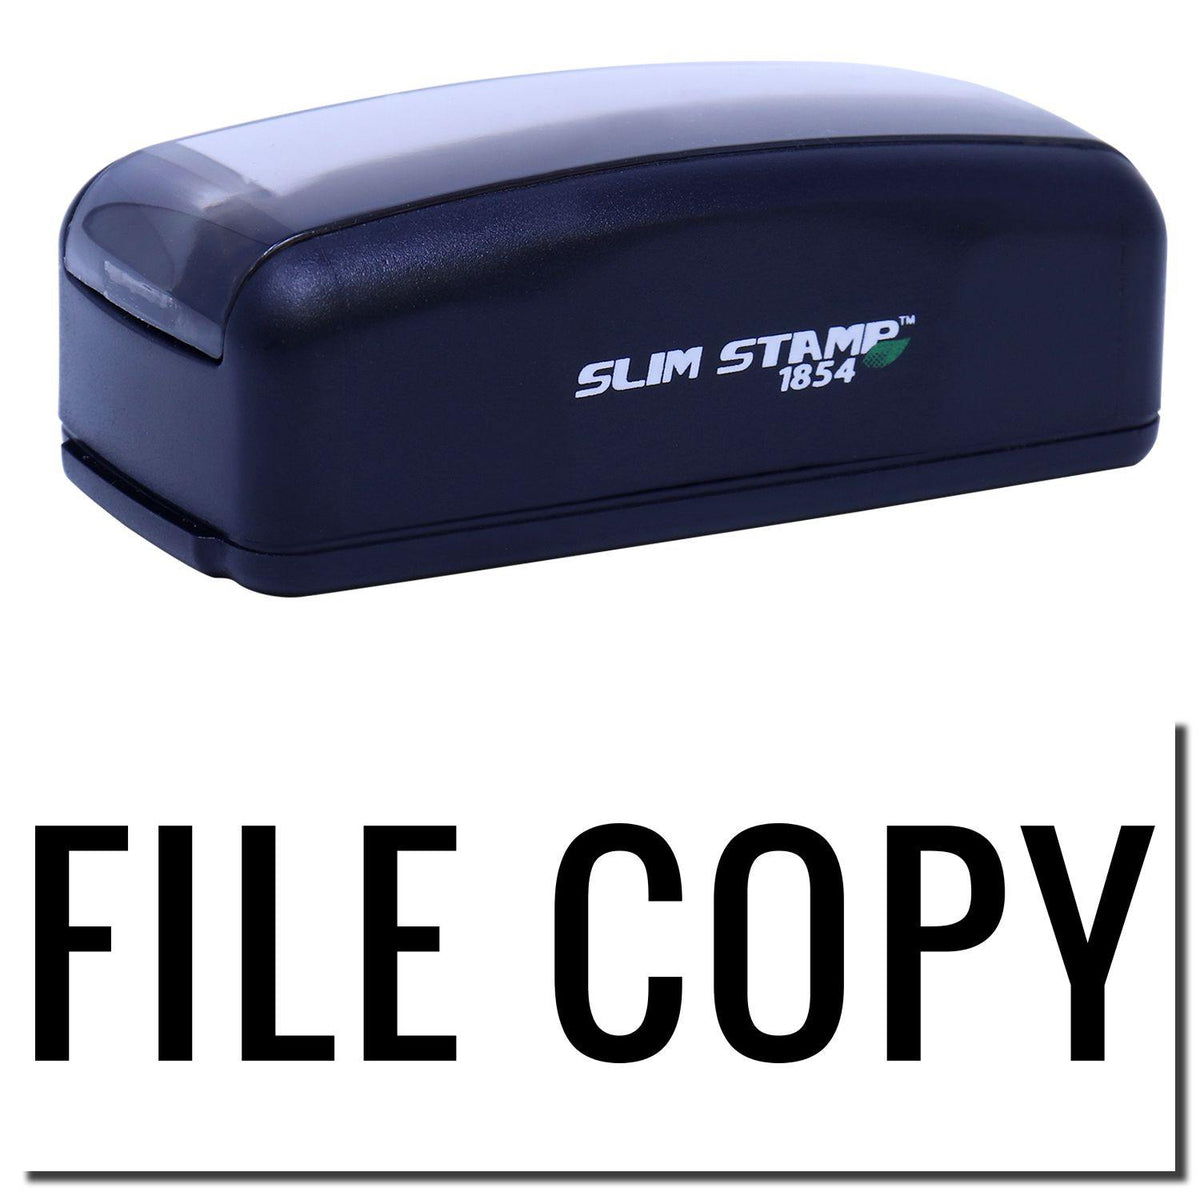 Large Pre-Inked Narrow Font File Copy Stamp Main Image